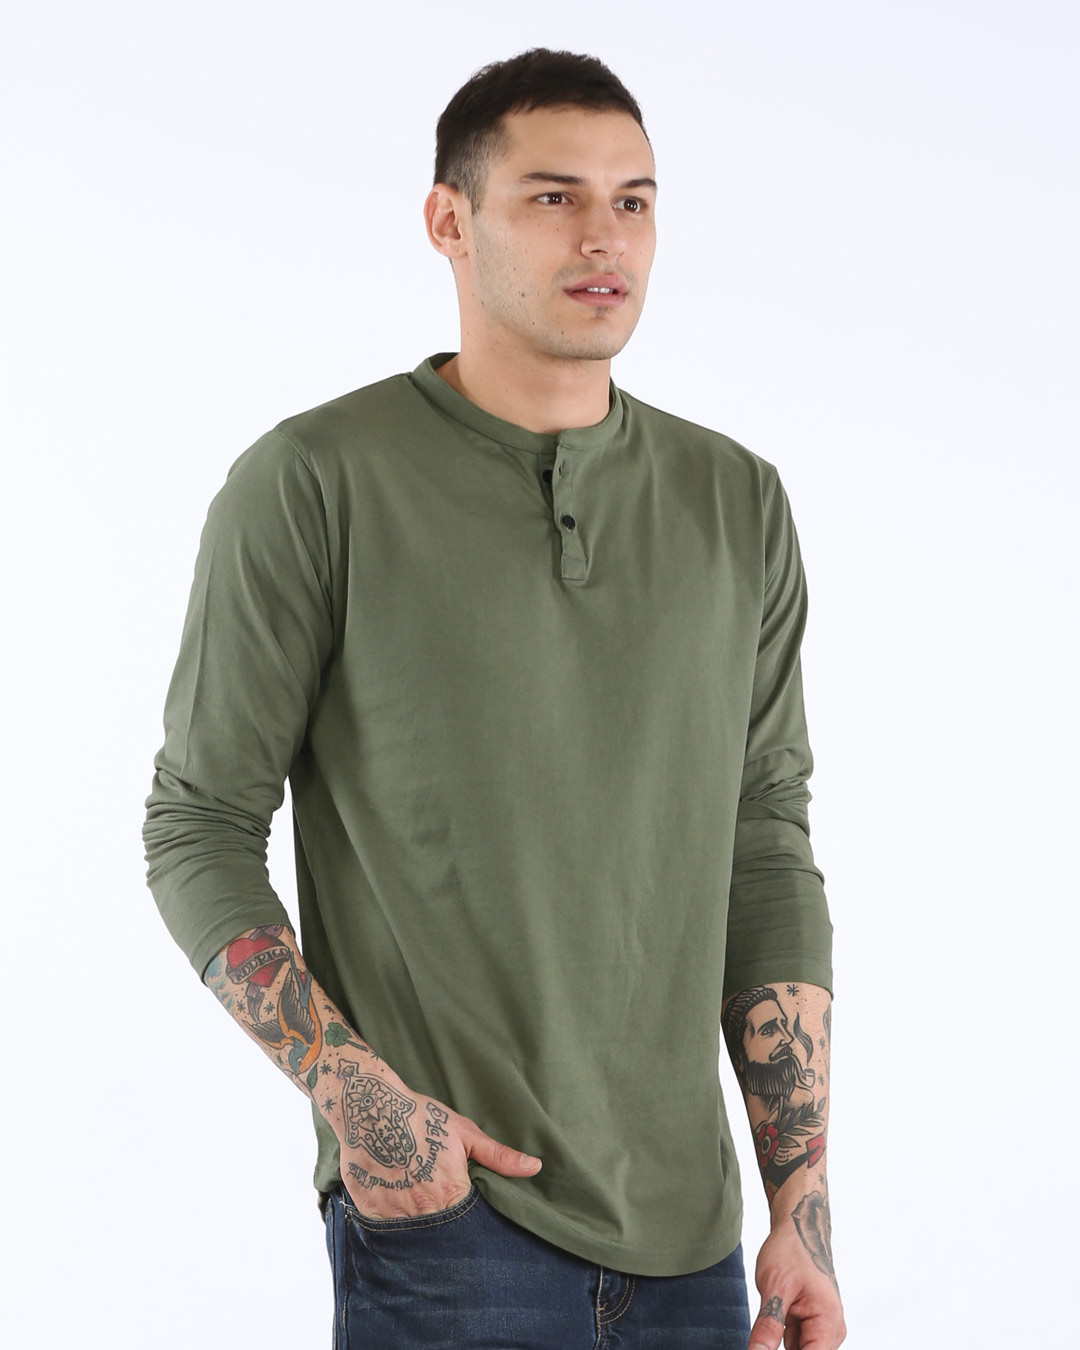 Buy Army Green Henley Full Sleeve T-Shirt for Men green Online at Bewakoof